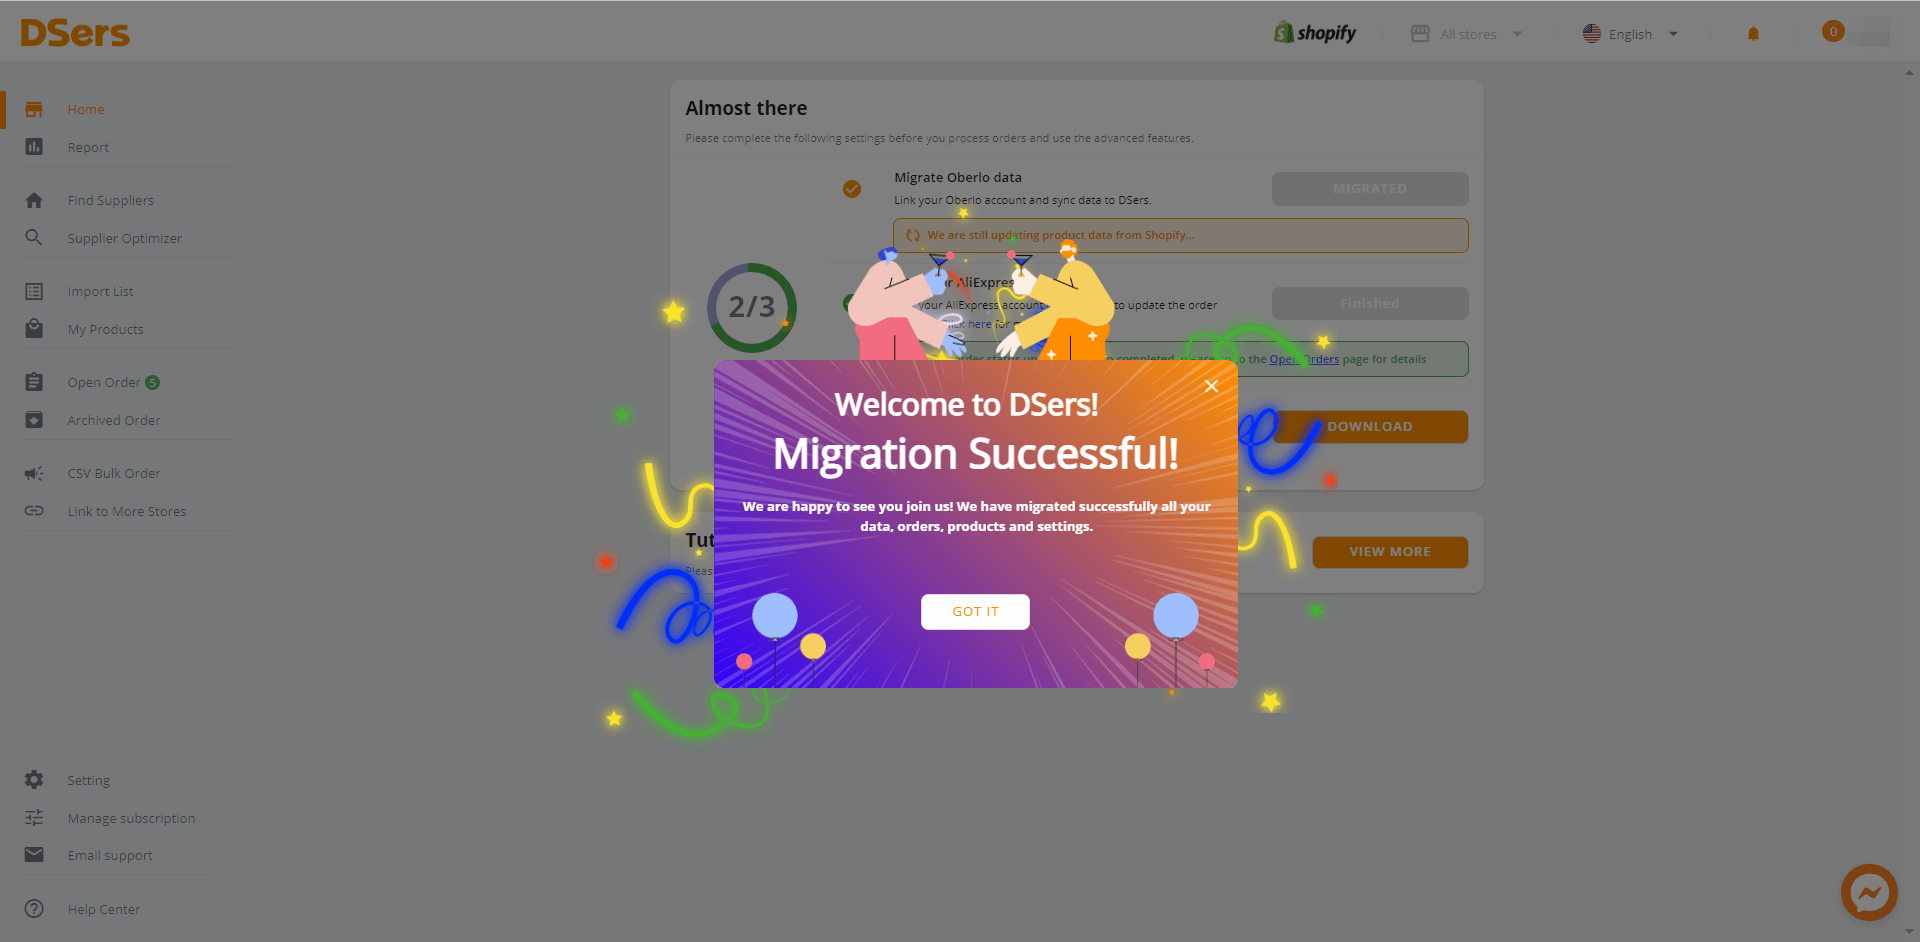 7-Migration in process-Got it